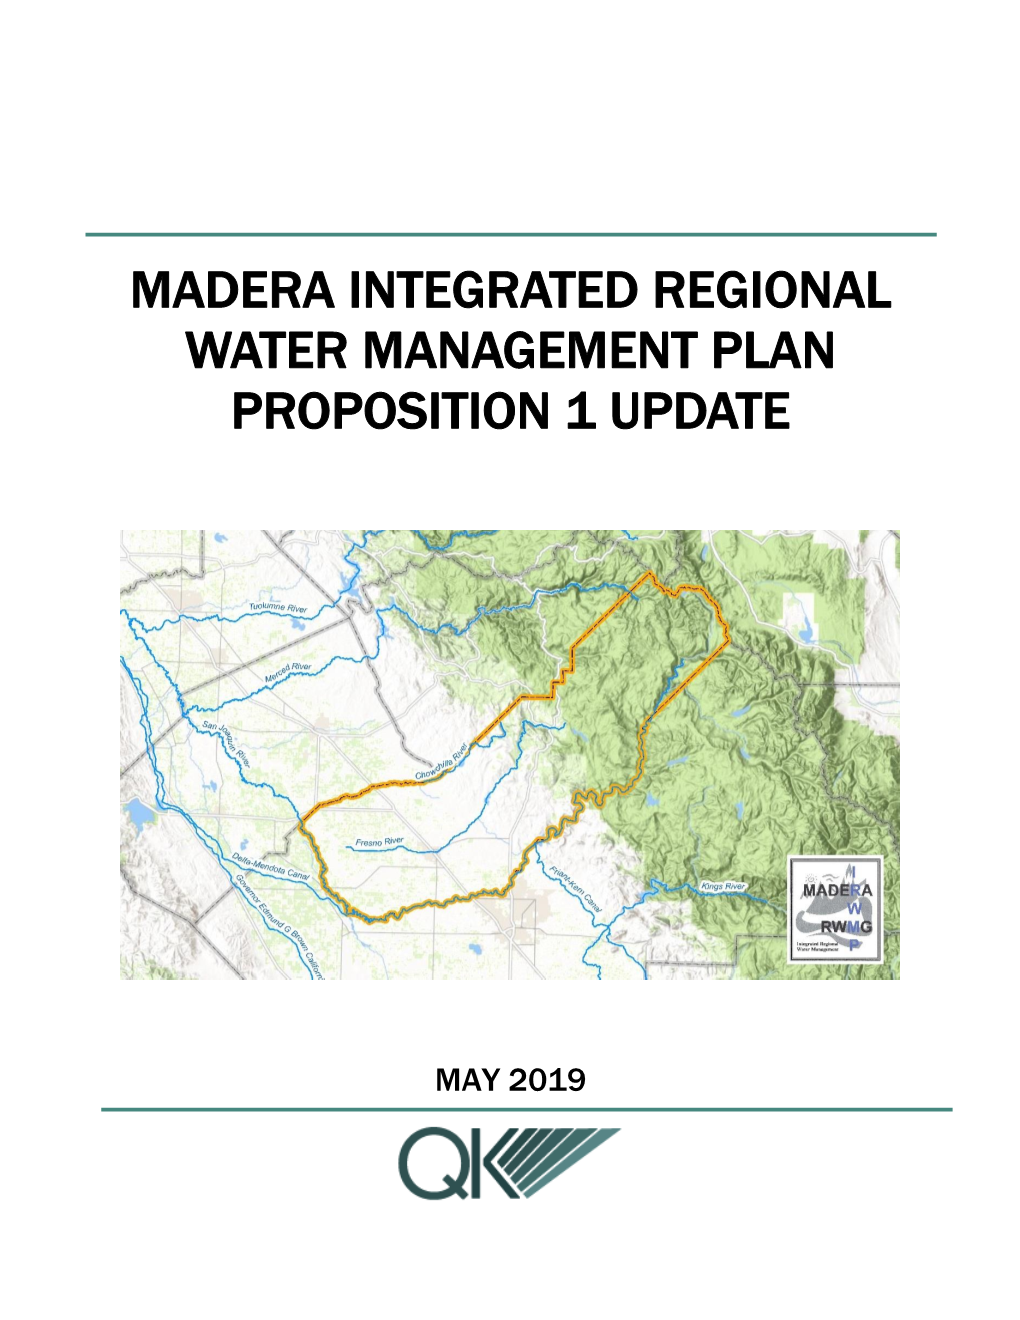 Madera Integrated Regional Water Management Plan 2019 Prop 1